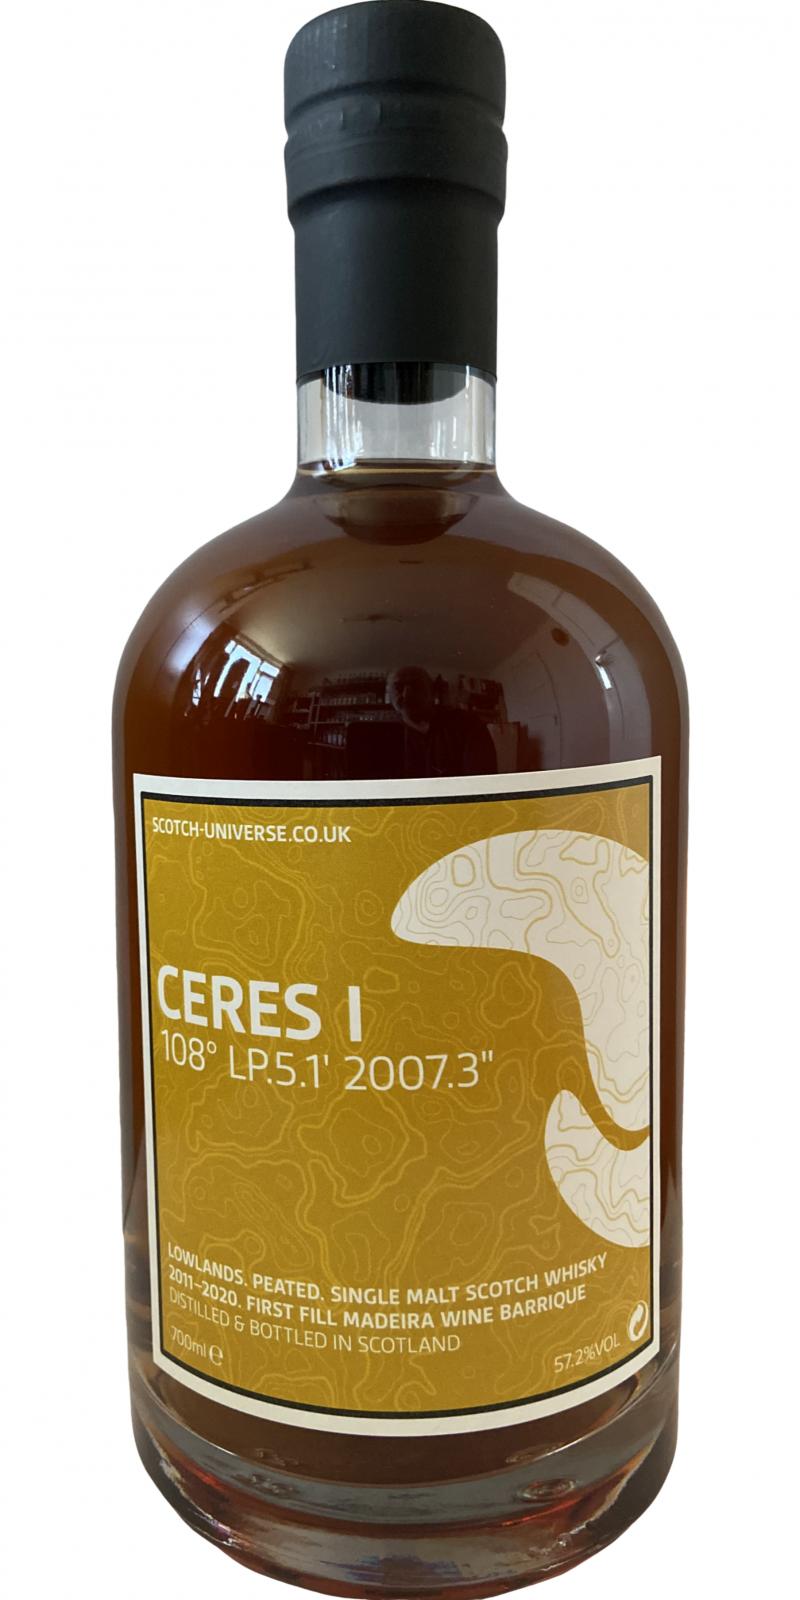 Scotch Universe Ceres I - 108° LP.5.1' 2007.3"